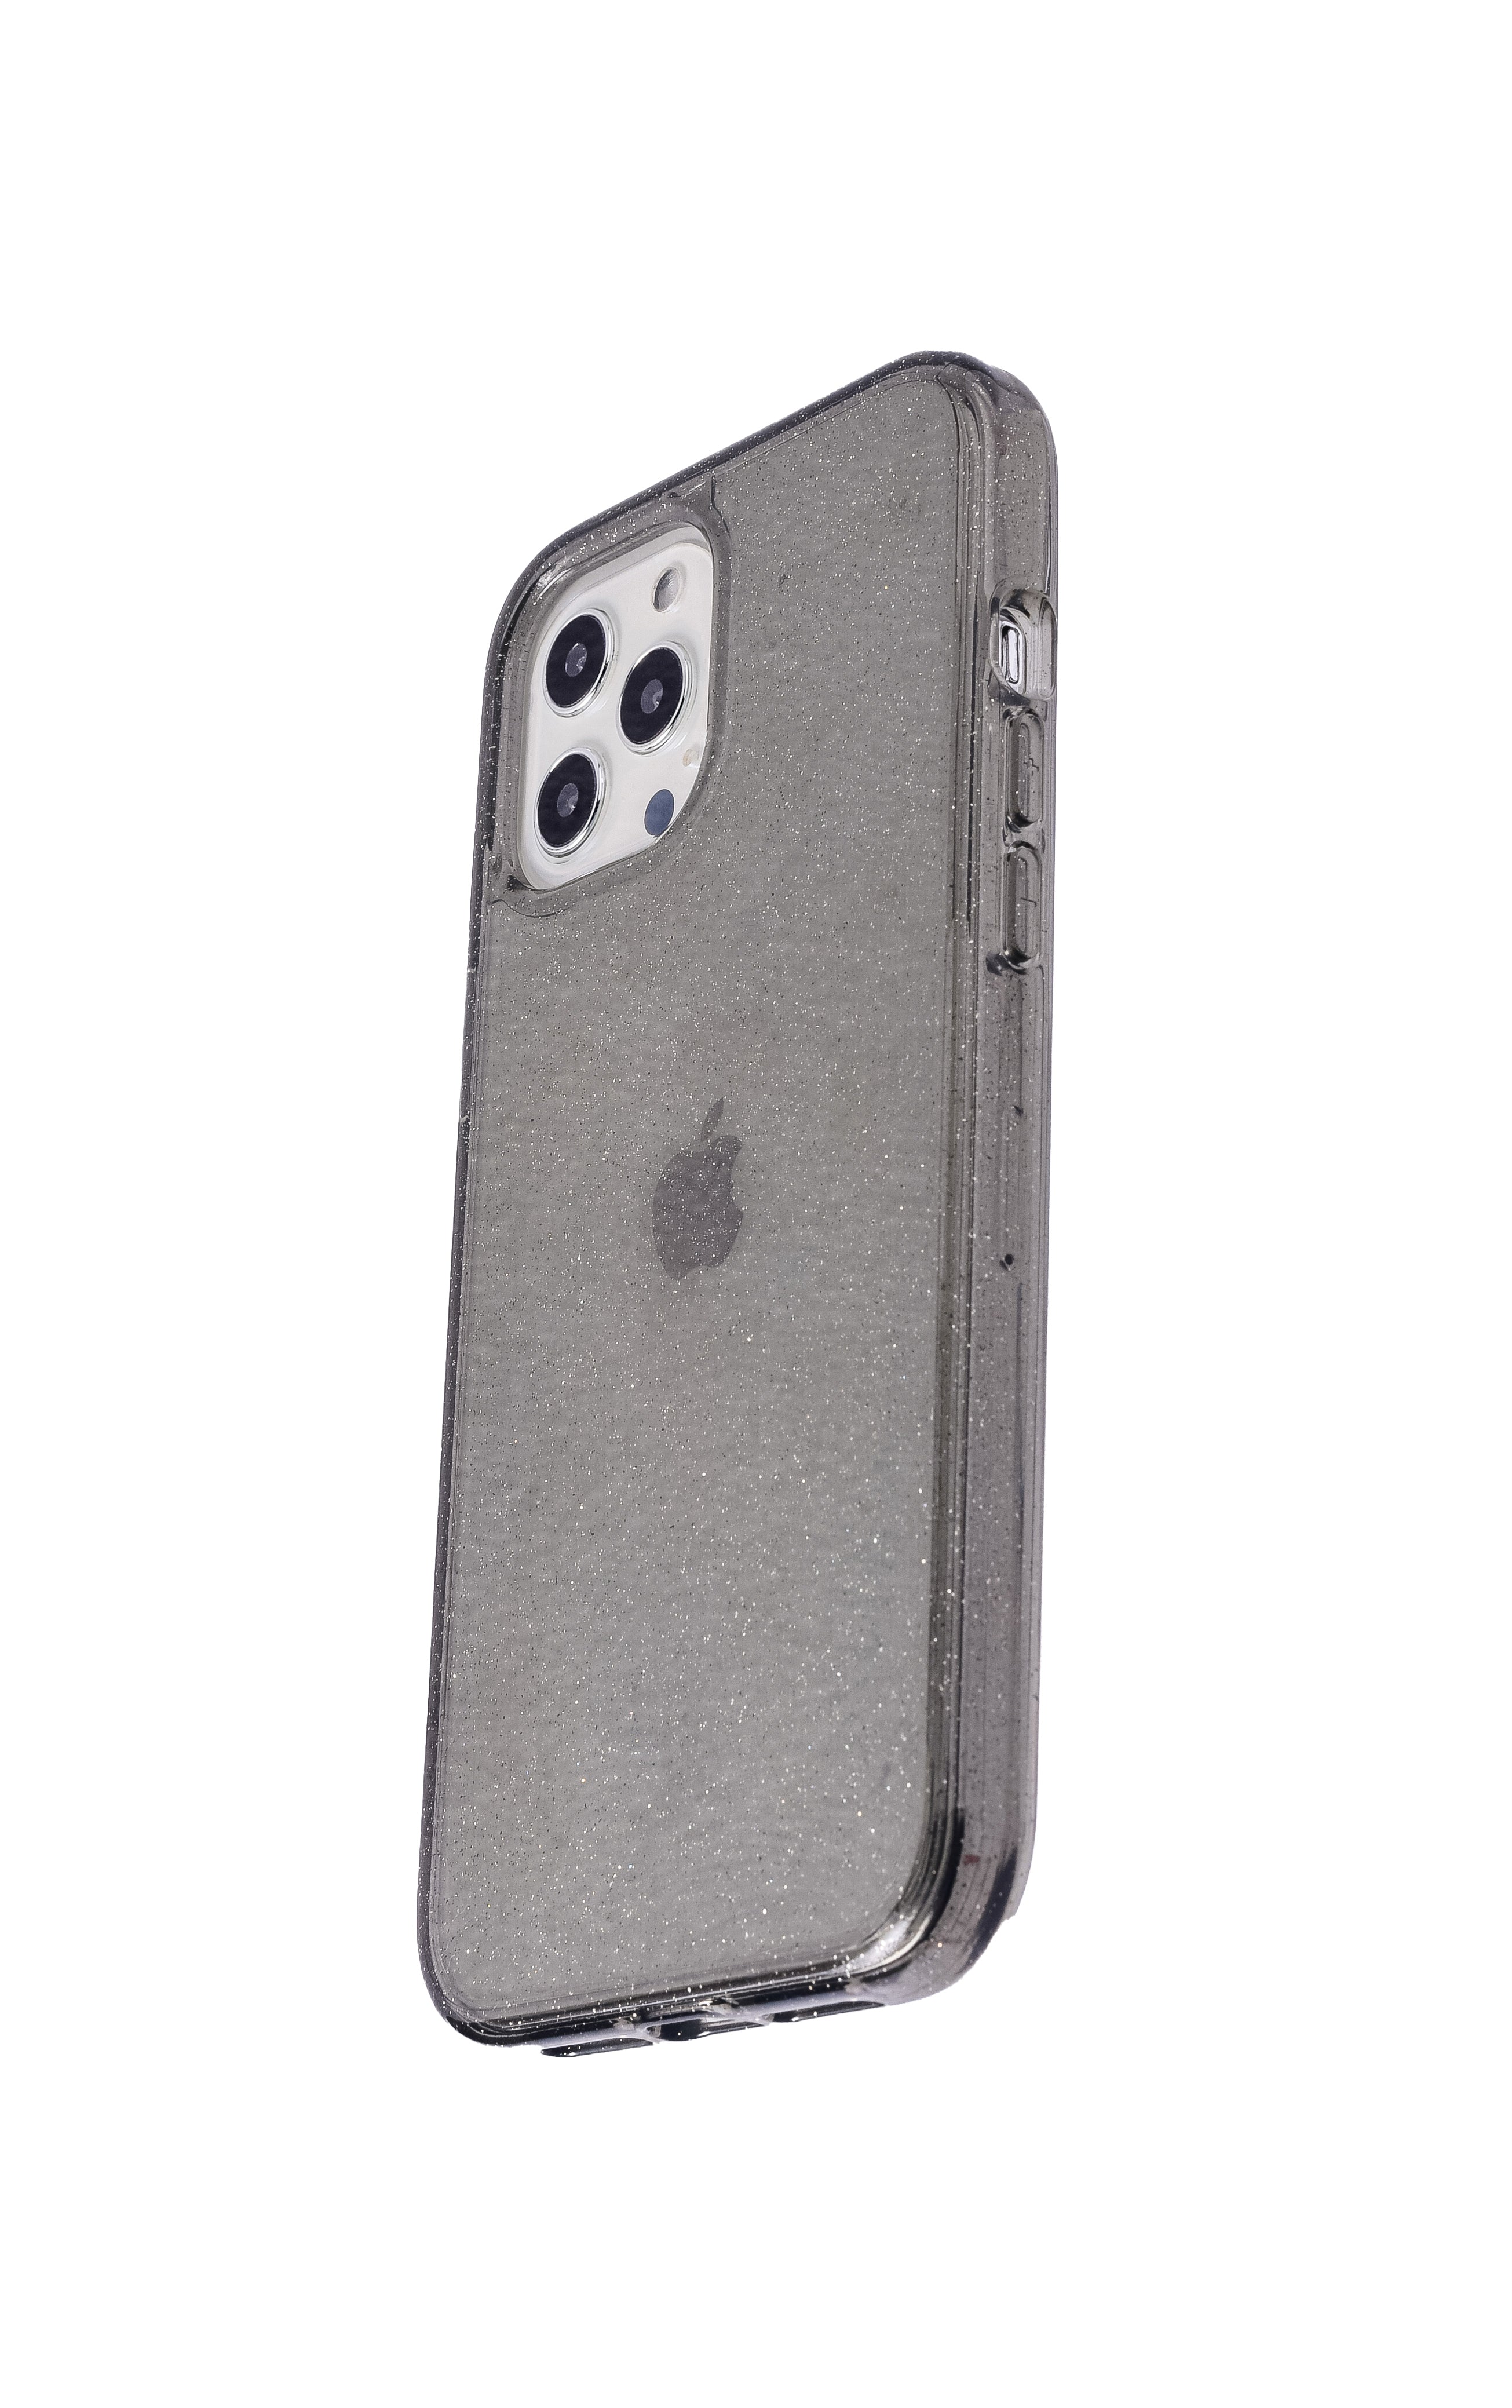 Nebula™ Black Starlight Case - iPhone Case